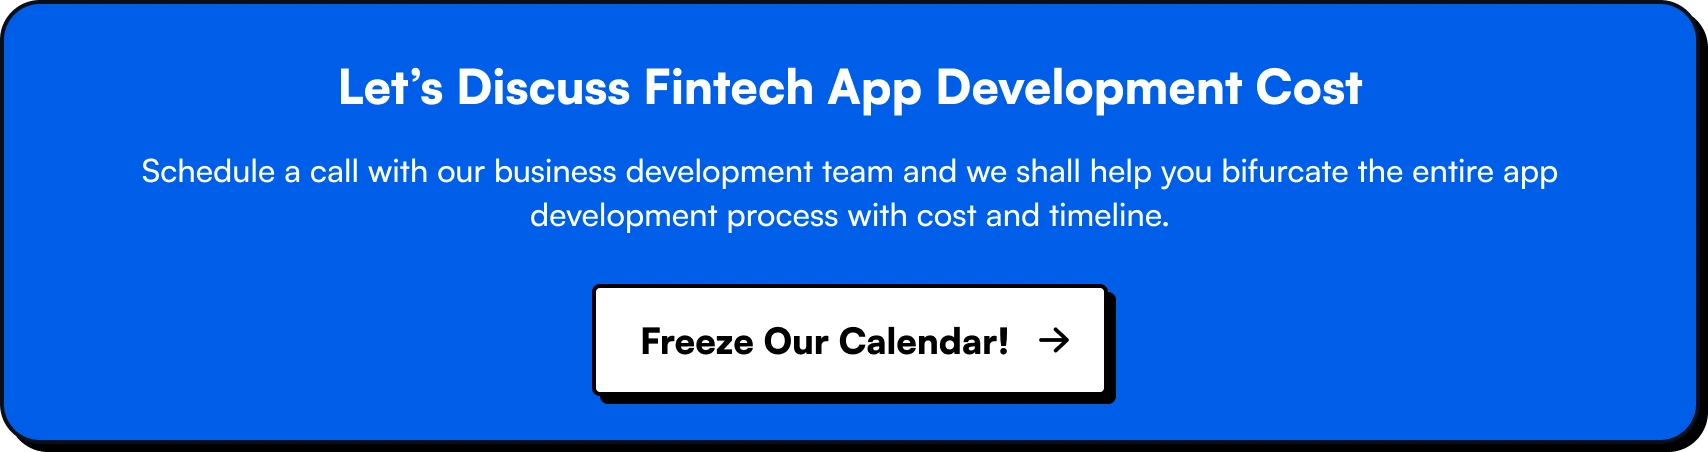 Let’s Discuss Fintech App Development Cost